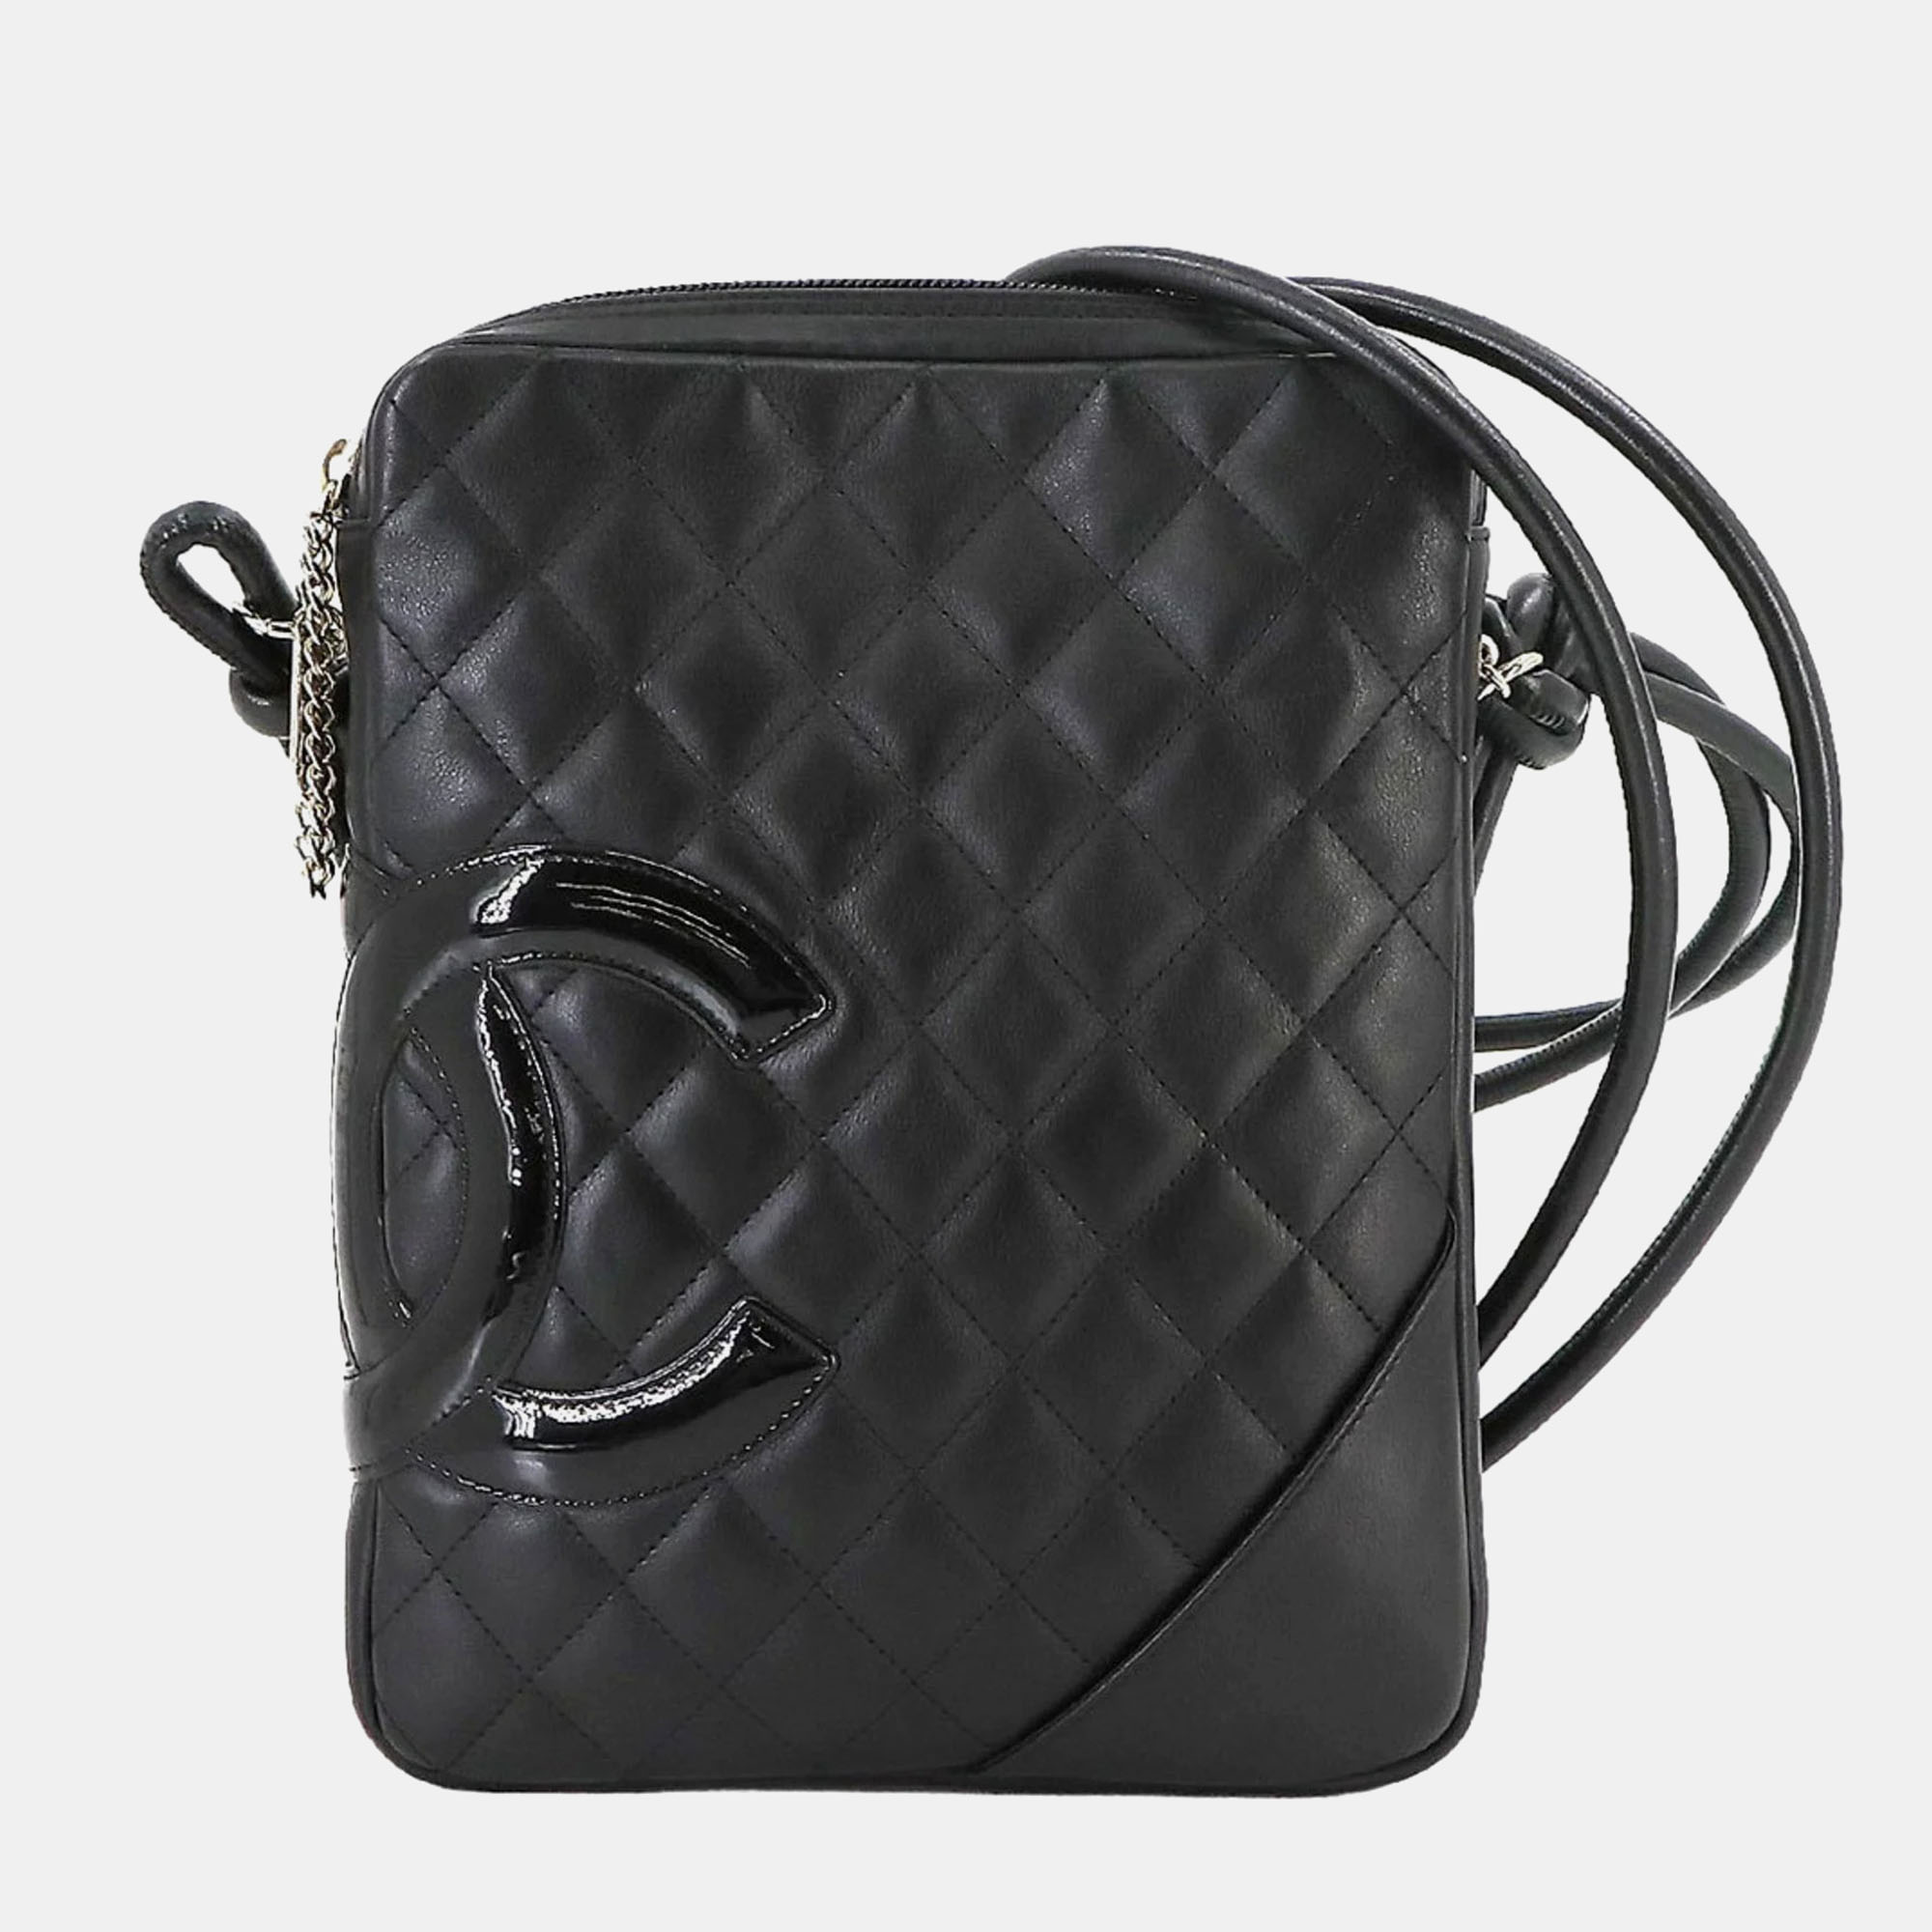 Chanel black quilted leather medium cambon shoulder bag